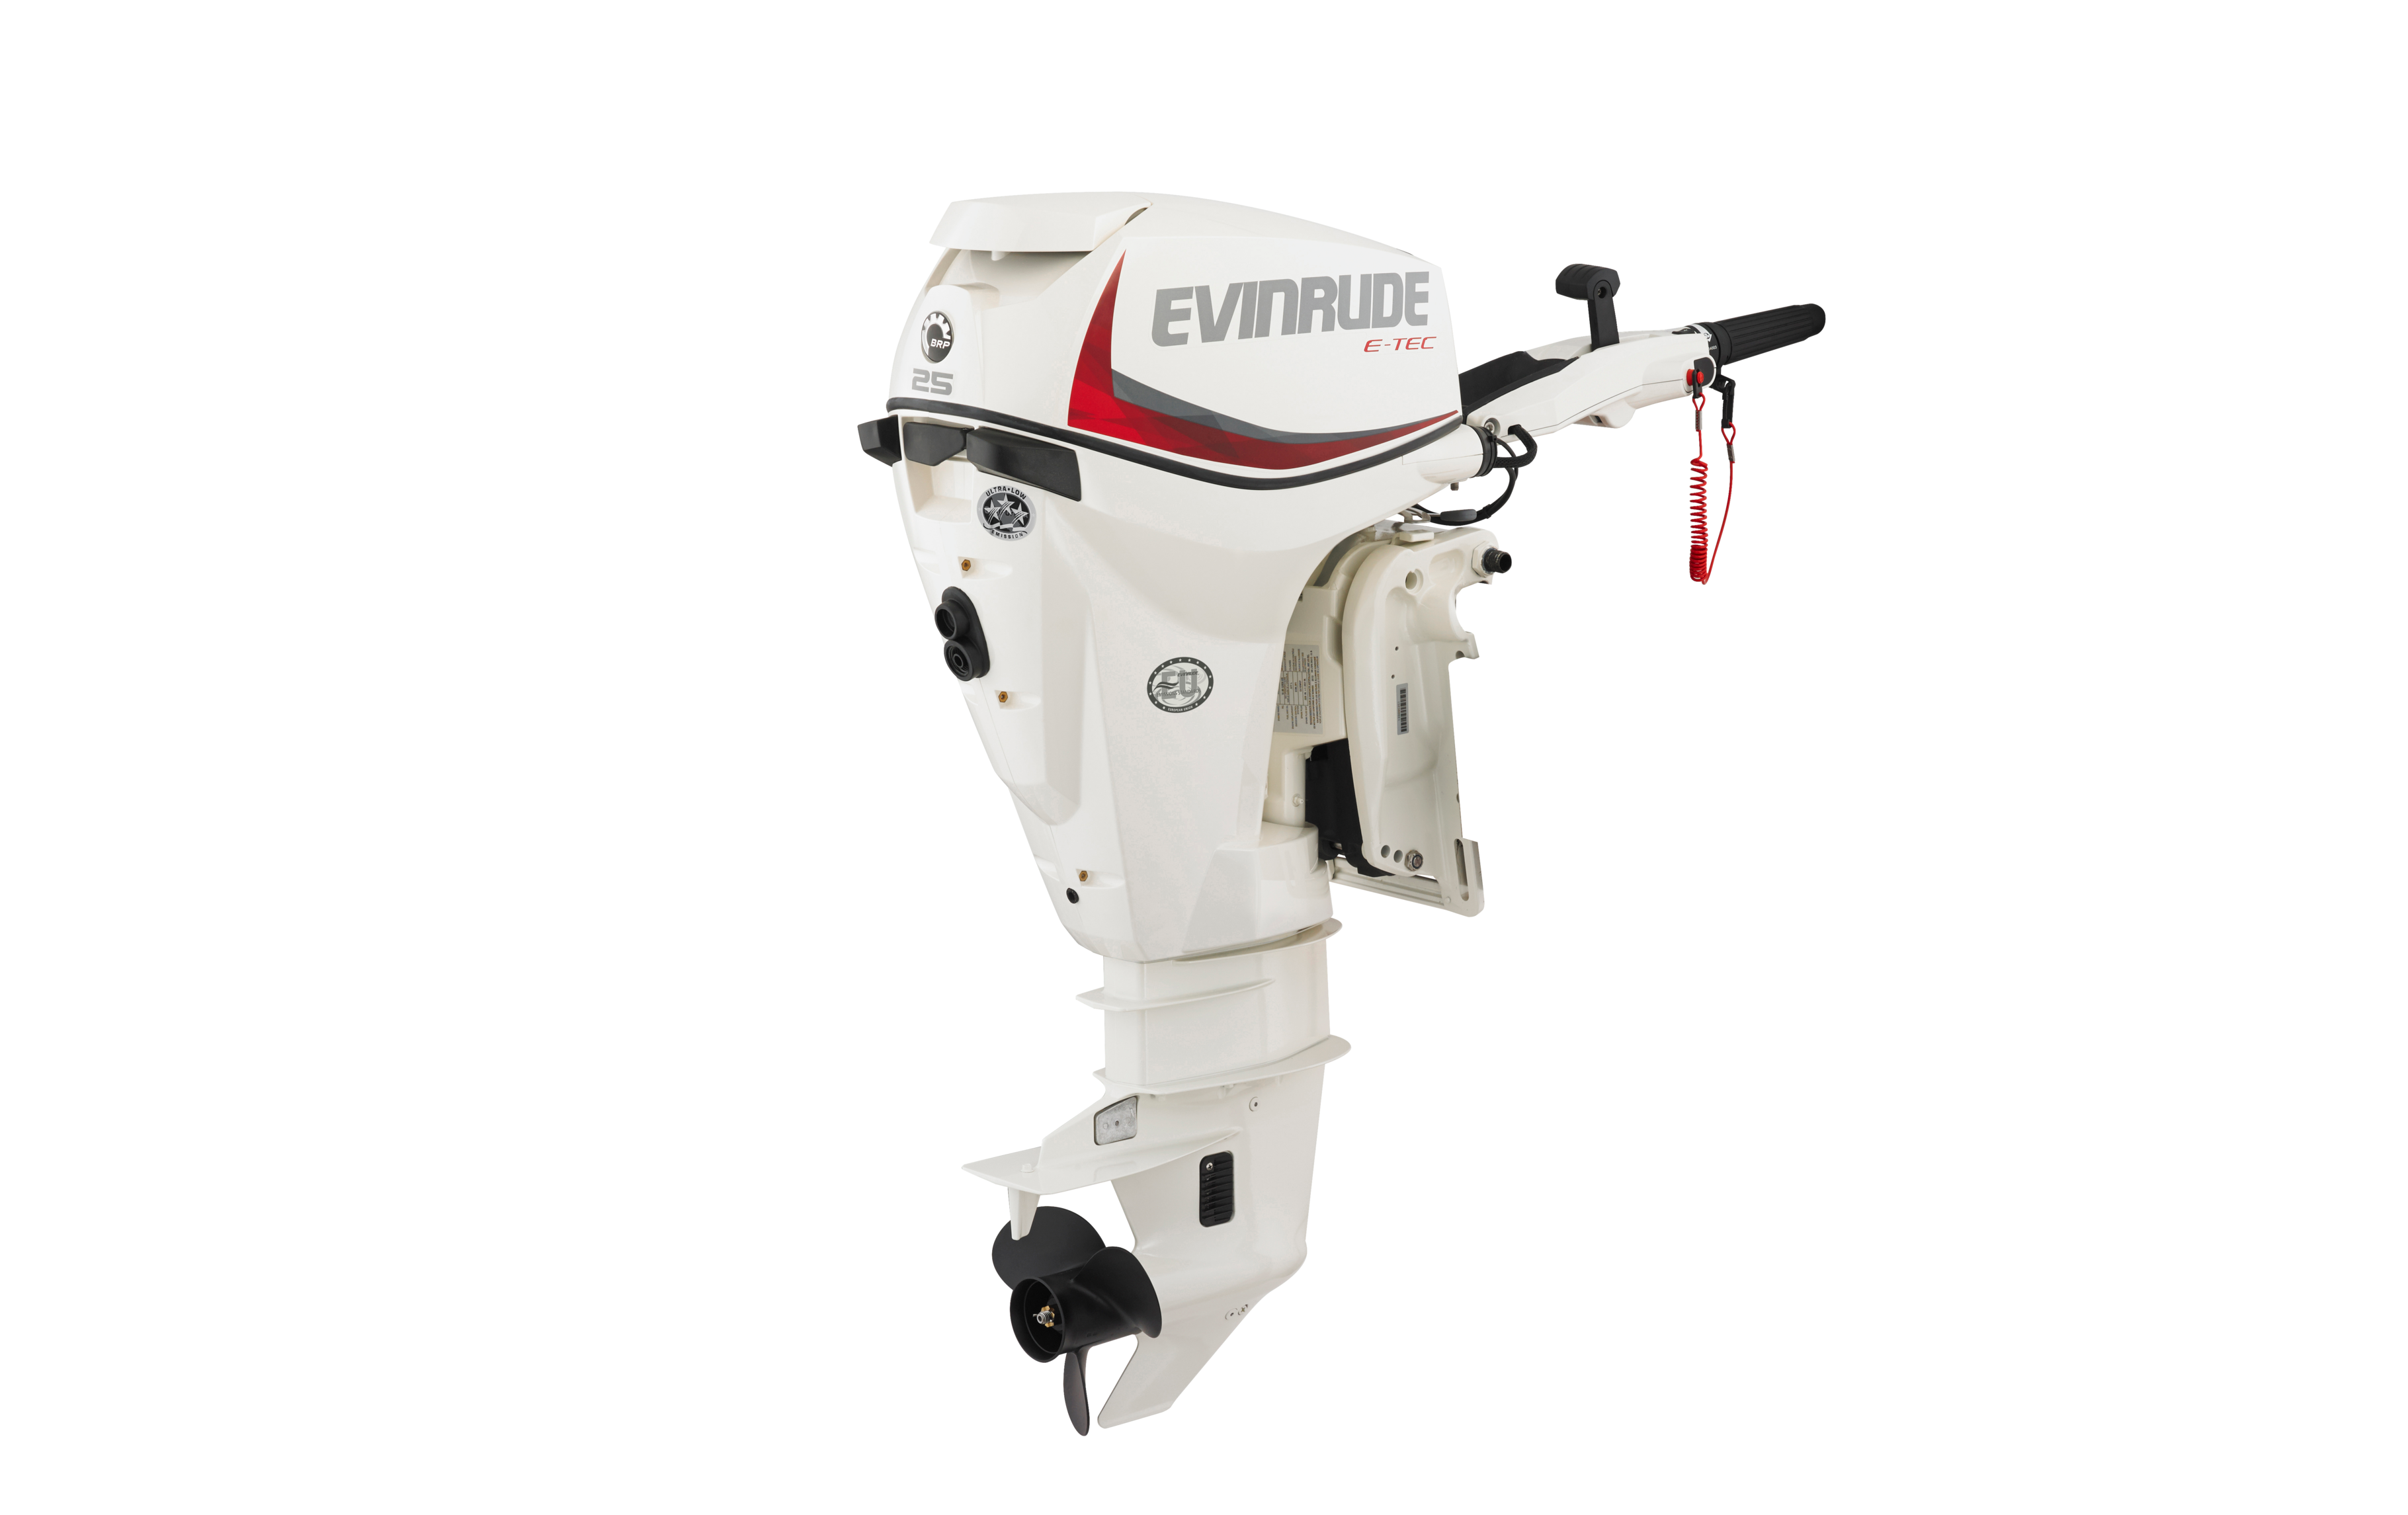 Lodní motor Evinrude E-TEC o výkonu 25 hp